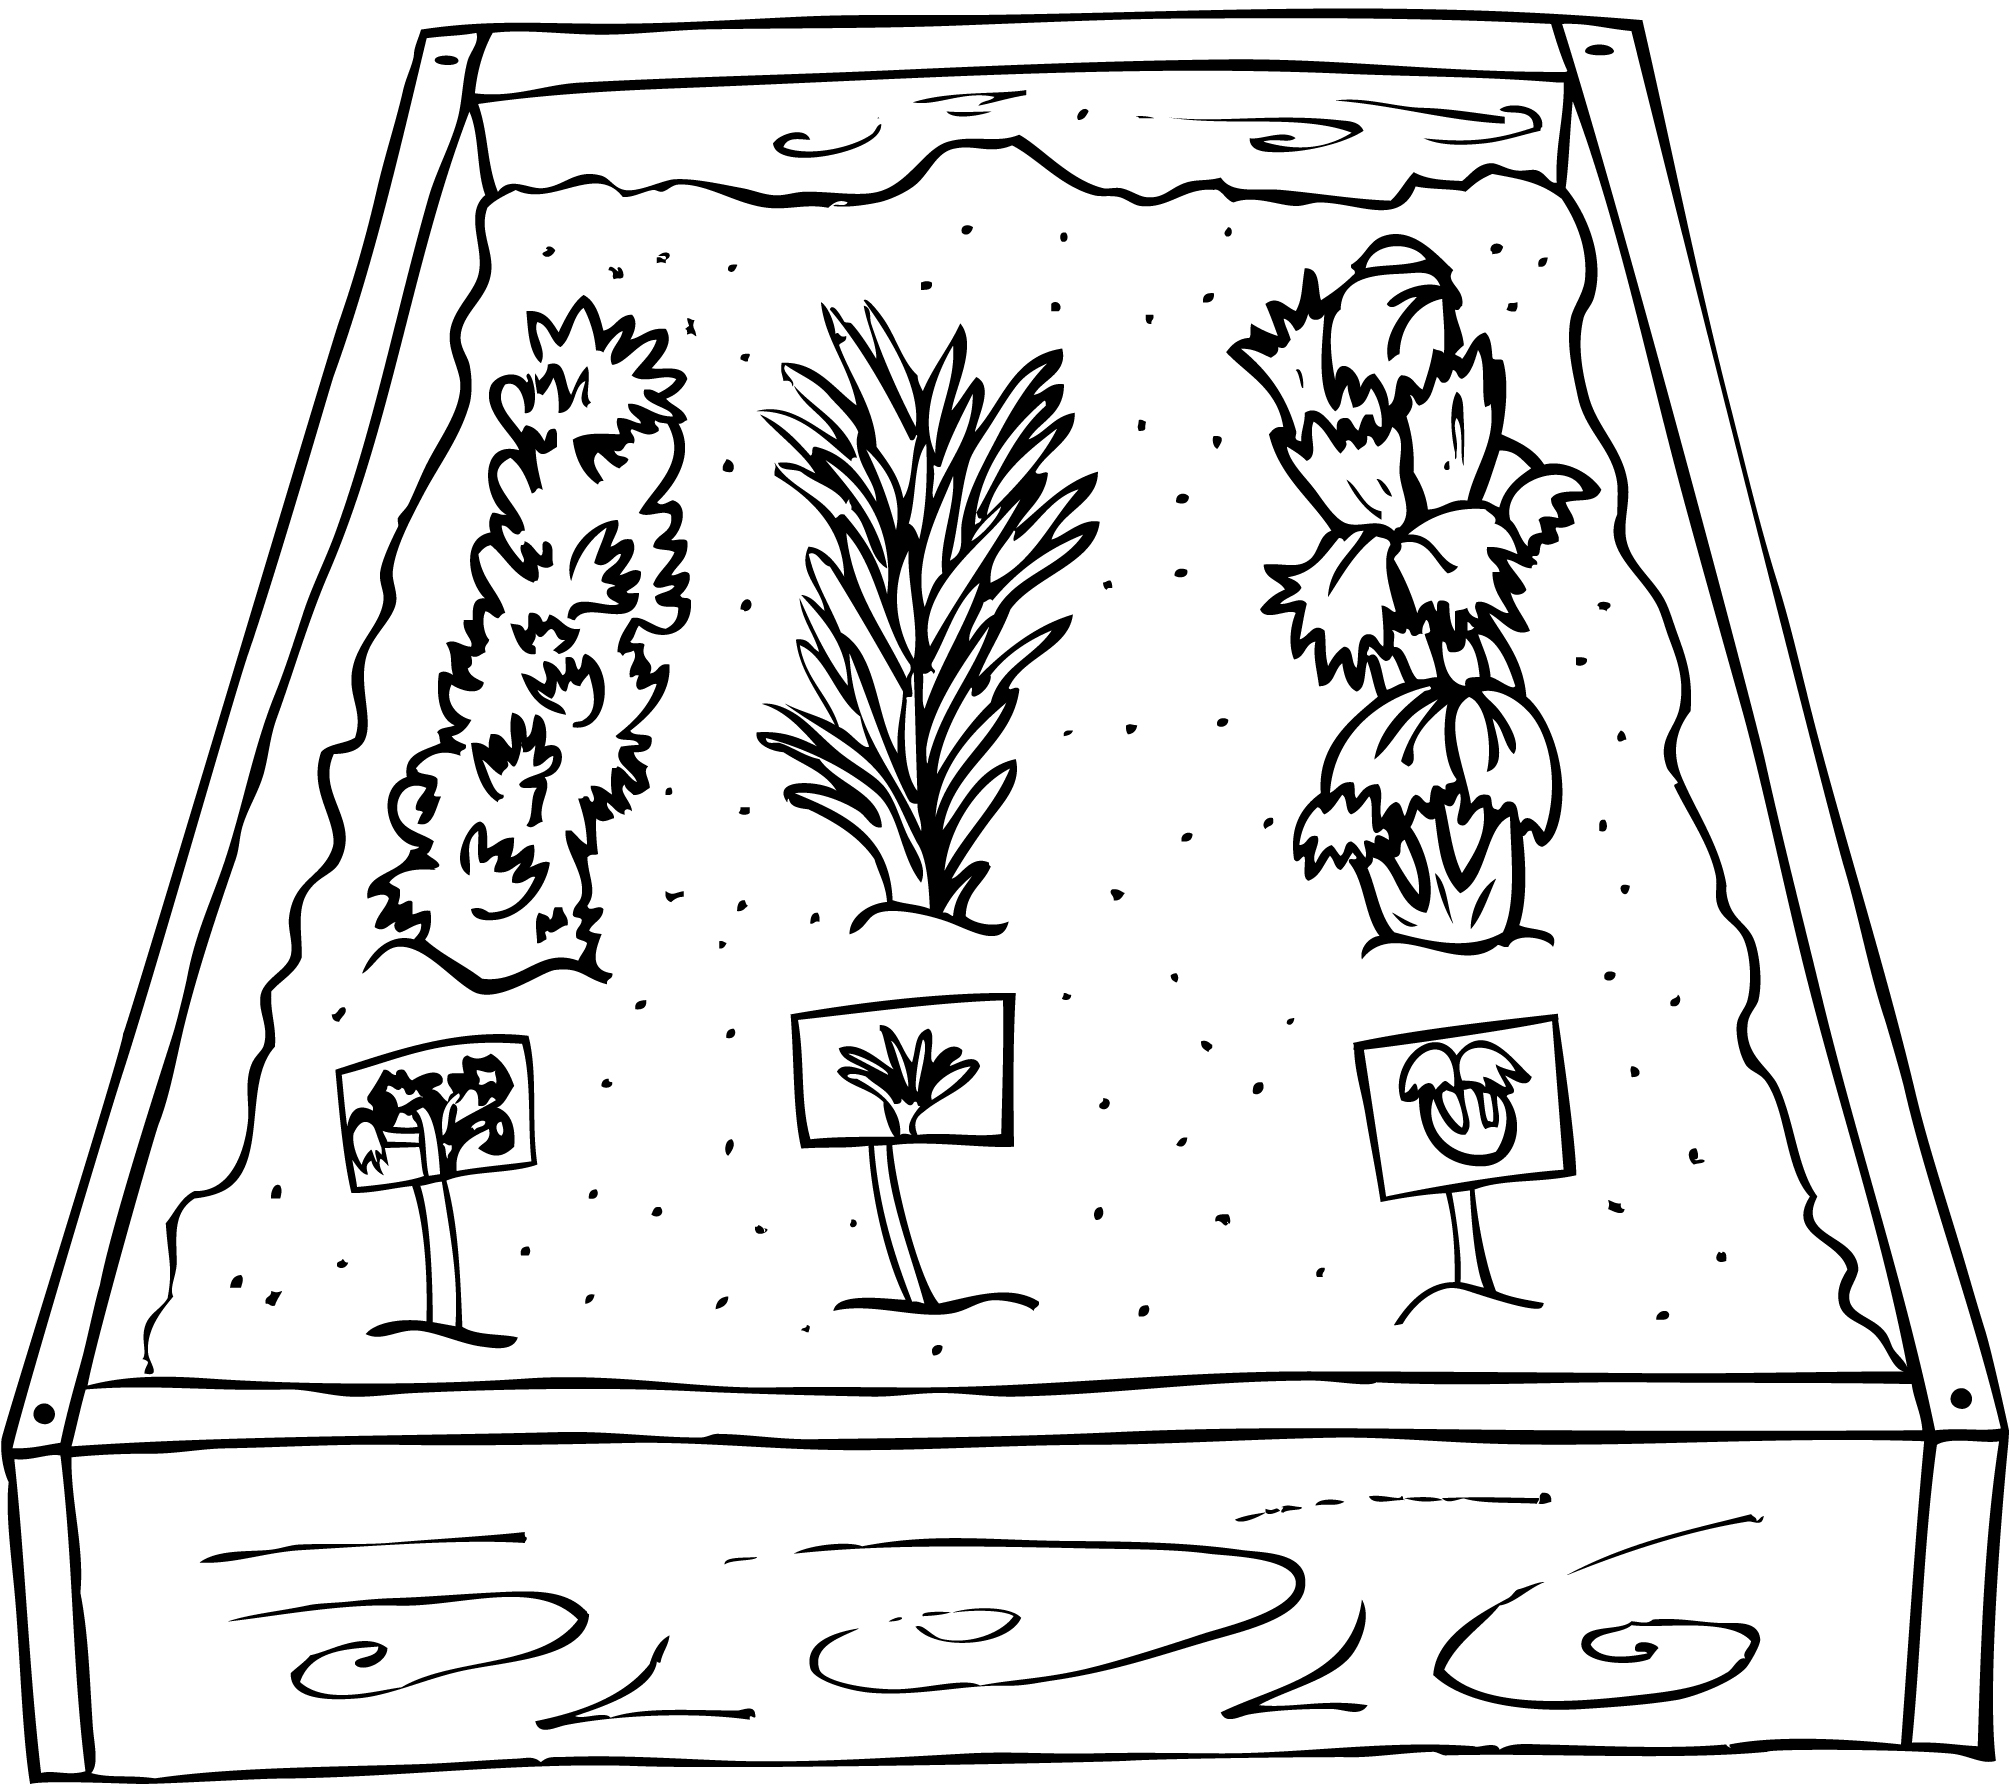 Drawing] Family Vegetable Garden ! Children Watering Vegetables - YouTube